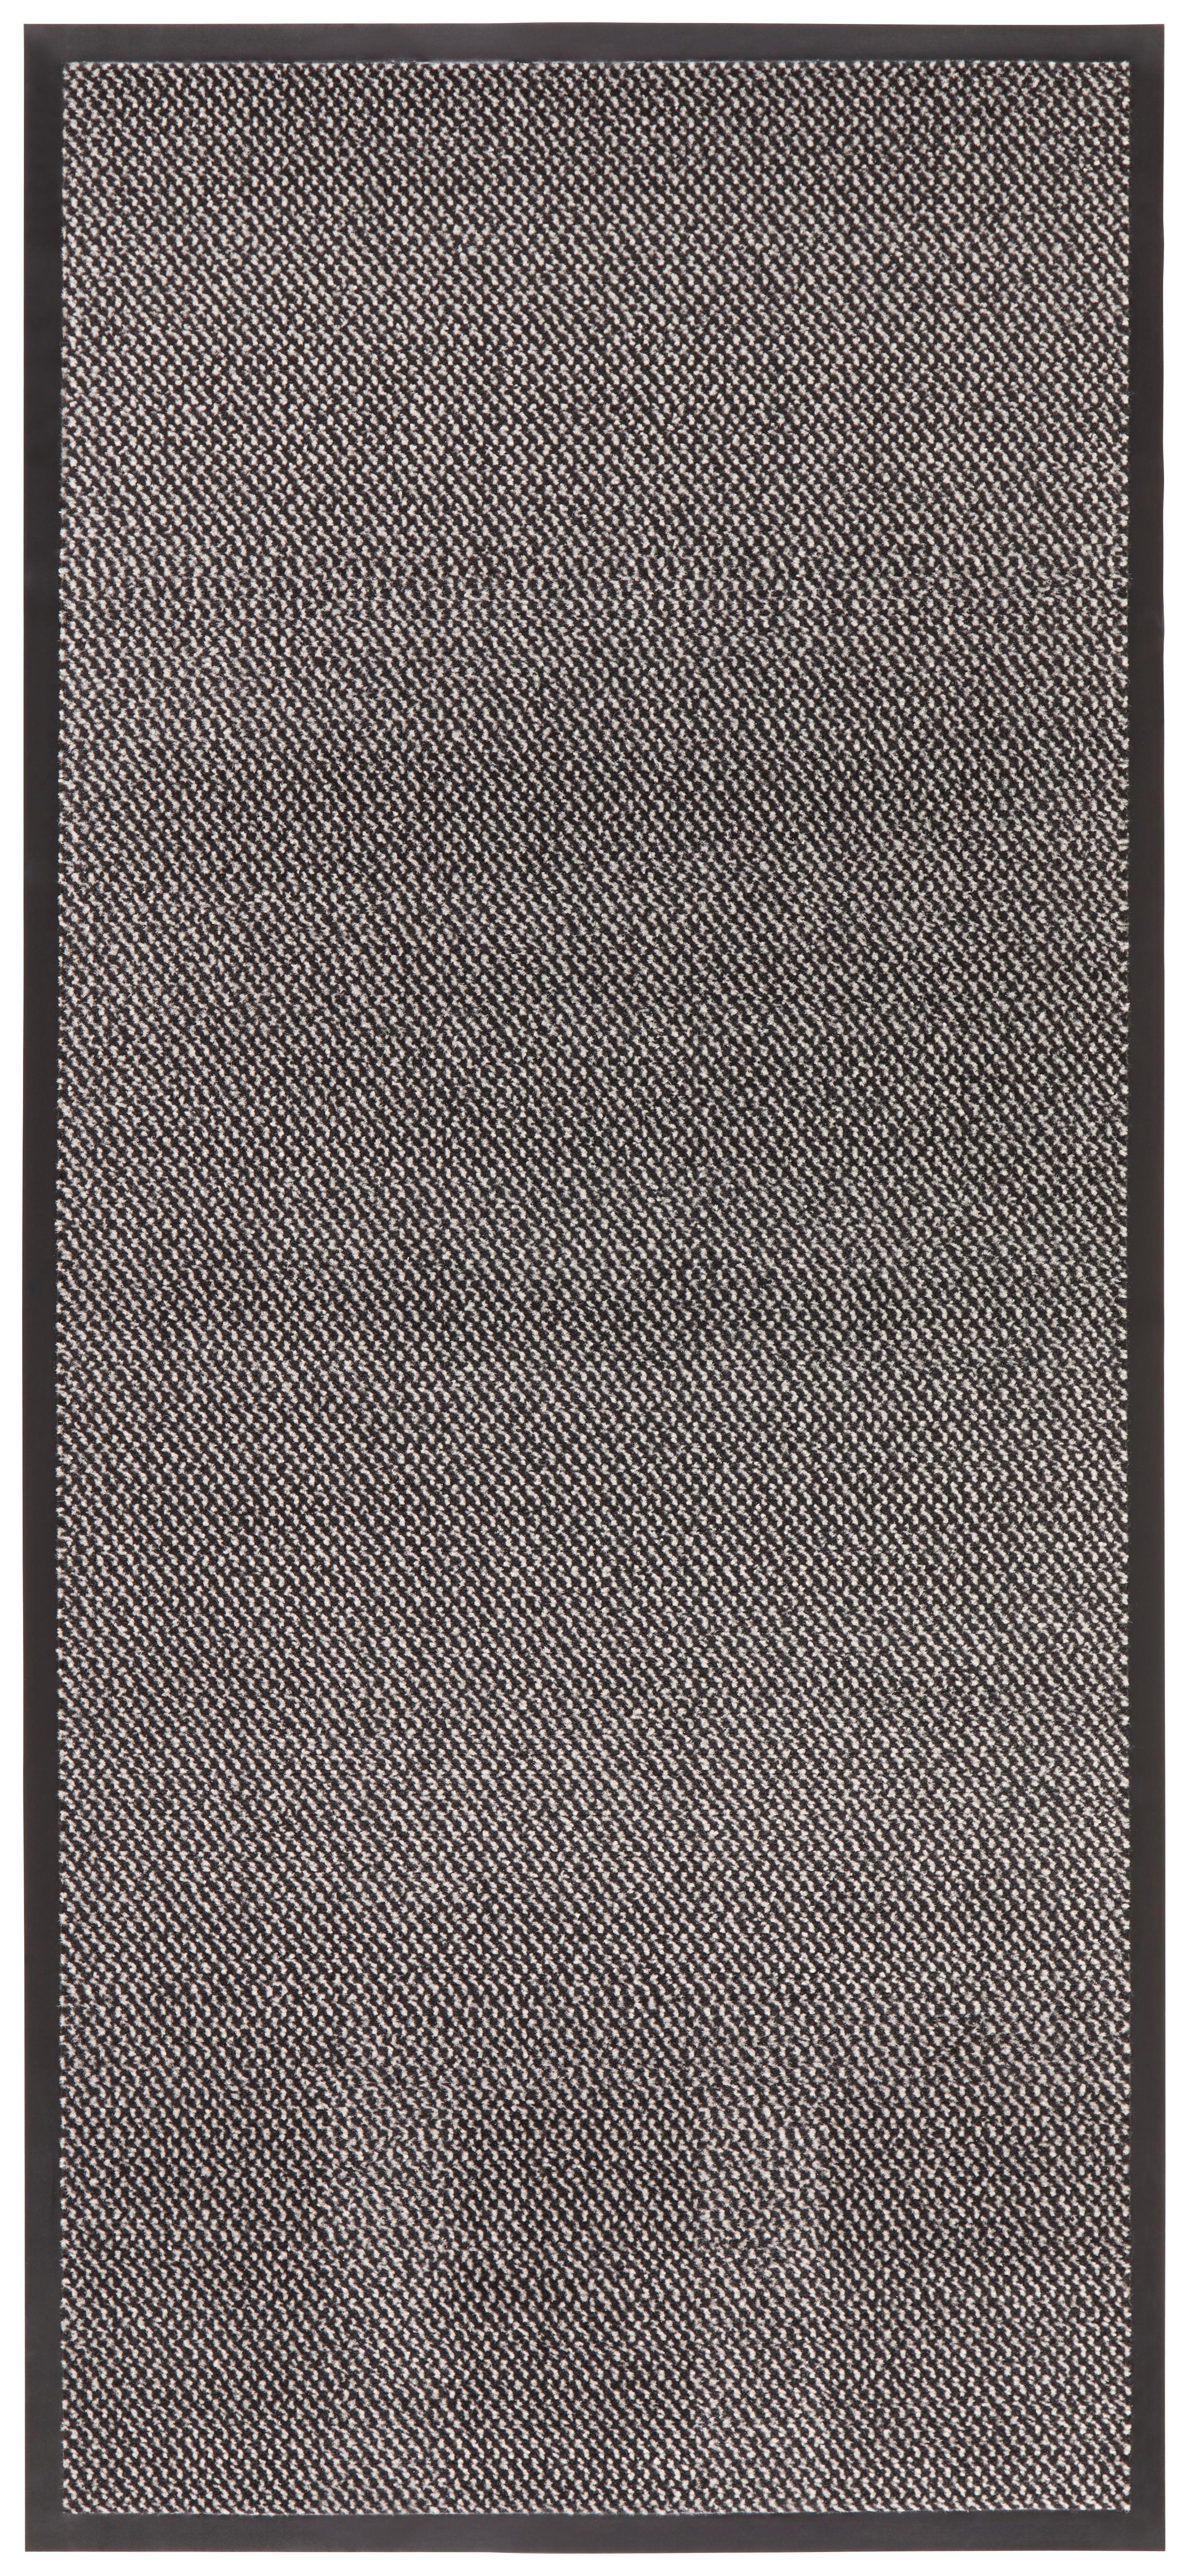 Tekač Hamptons 4 - črna/bež, Konvencionalno, tekstil (90/200cm) - Modern Living